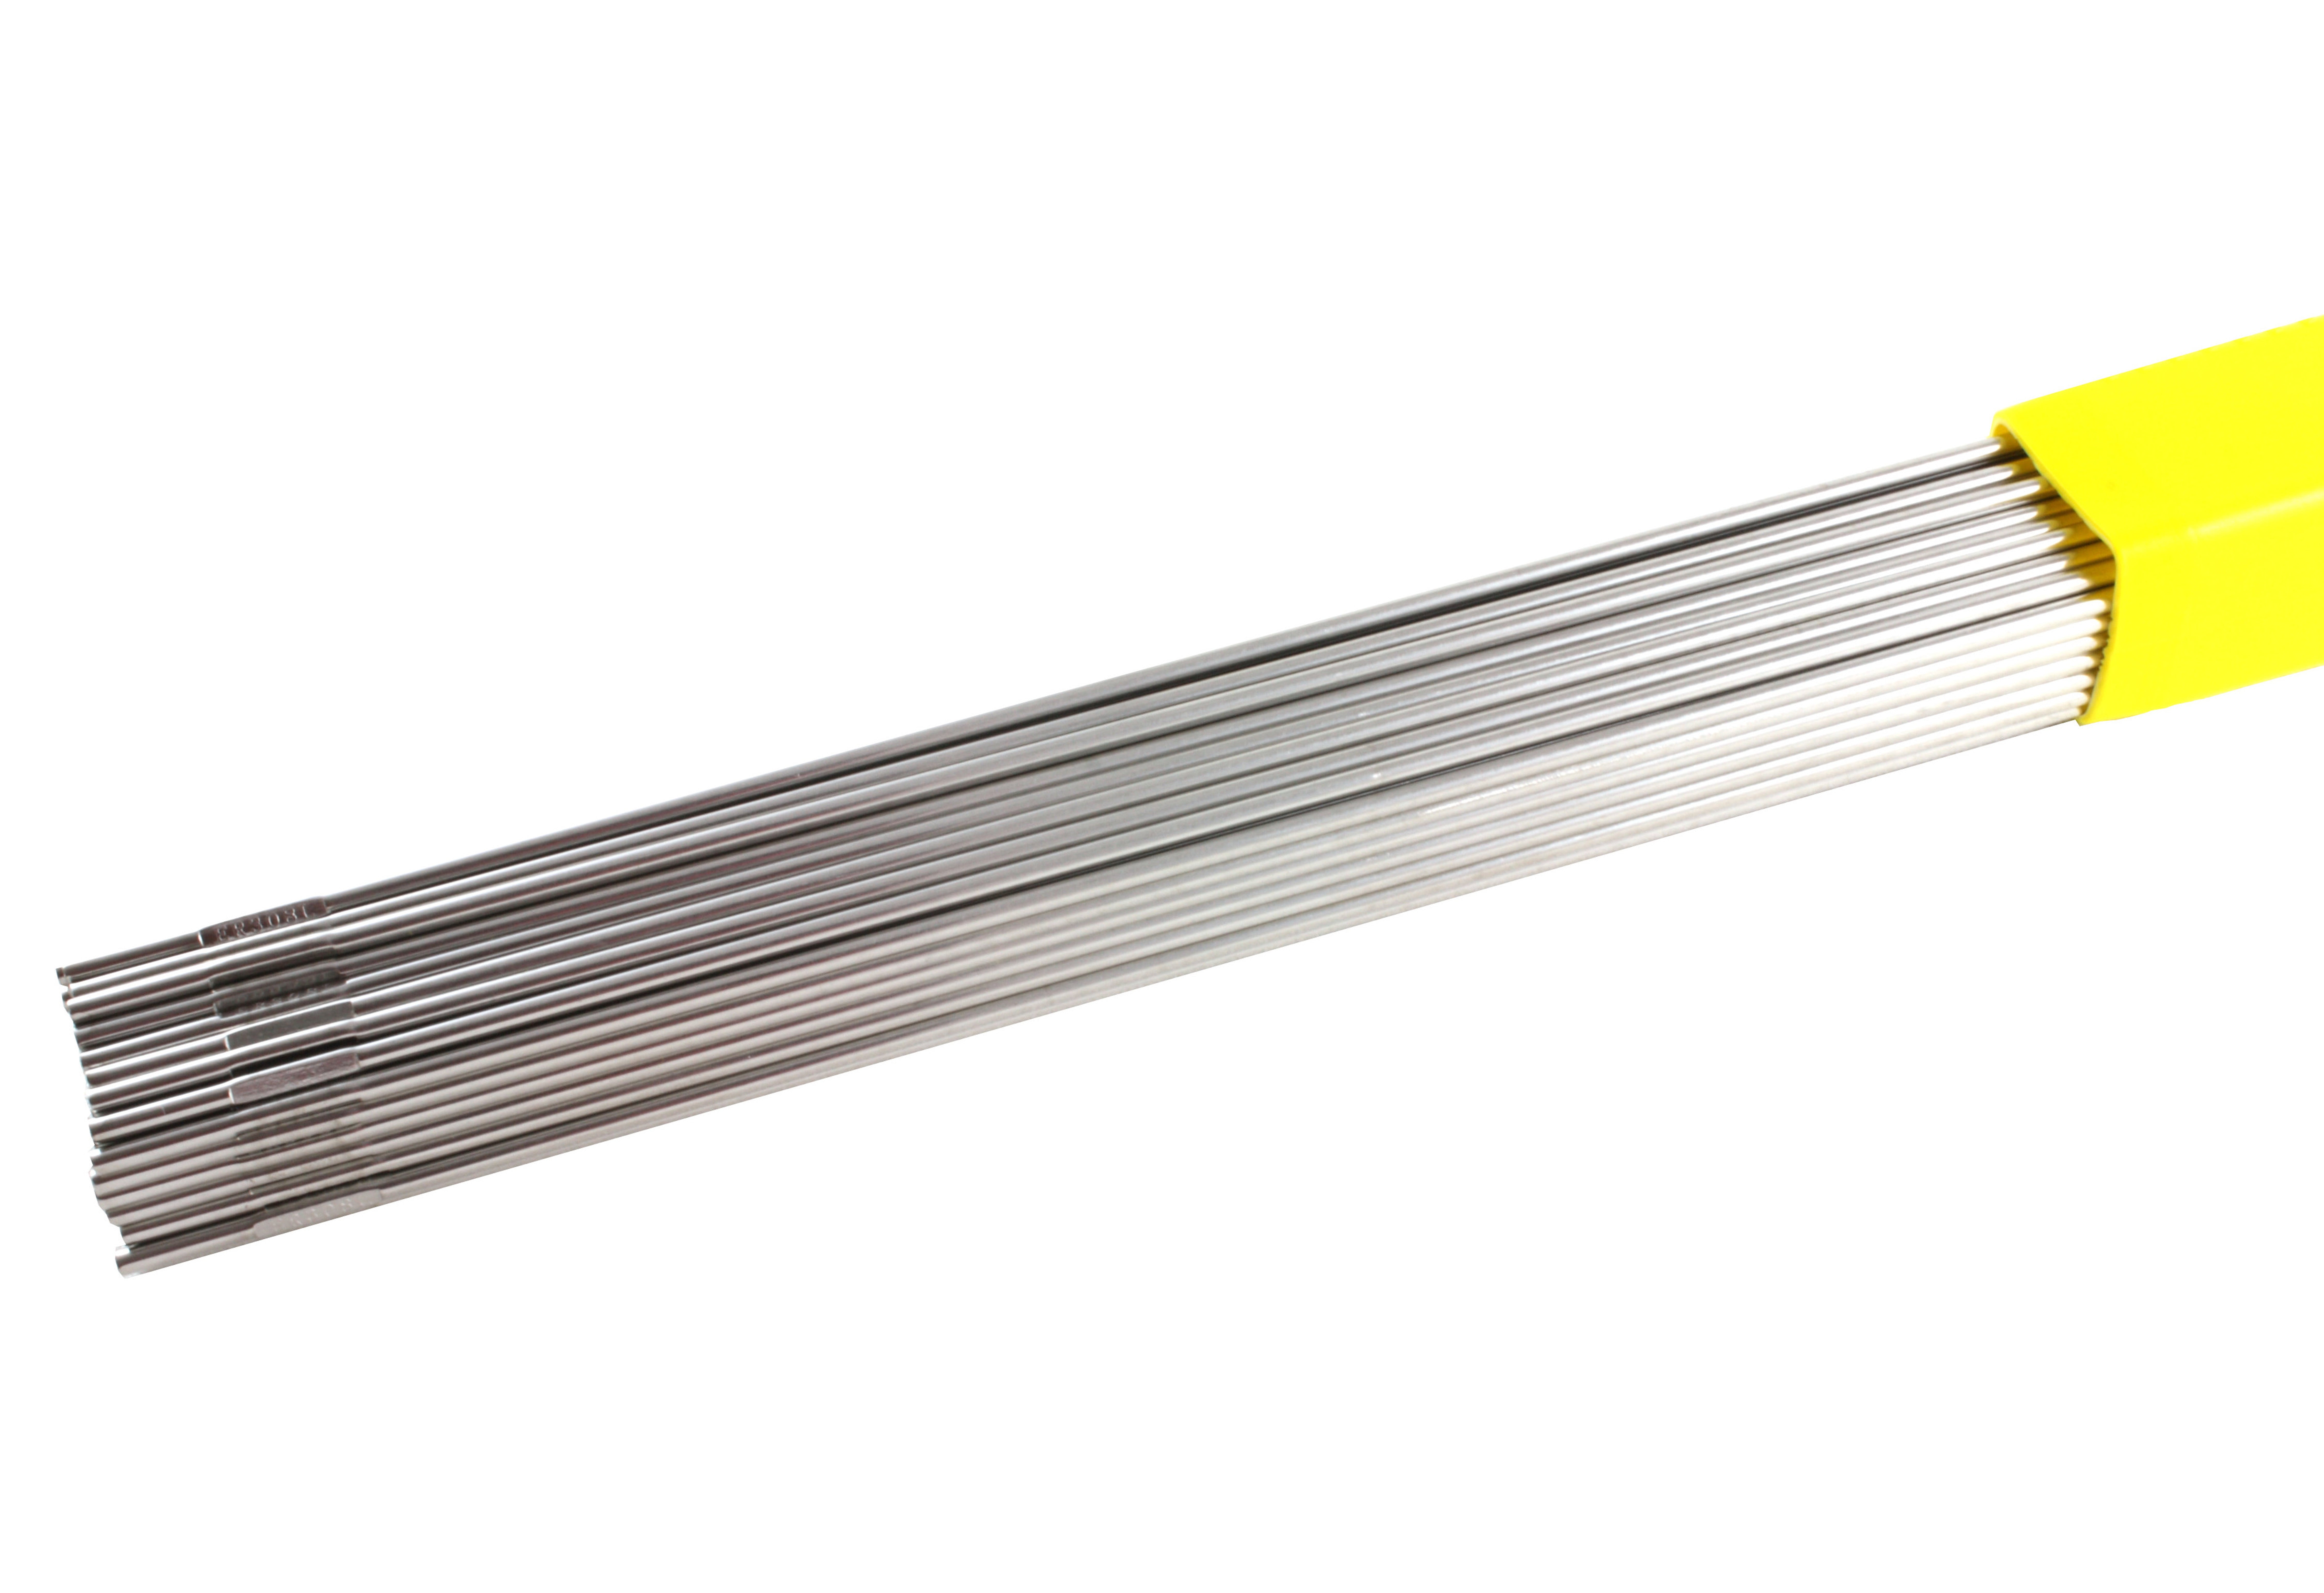 20 x 1.6 stainless steel  tig welding rods 316 grade 